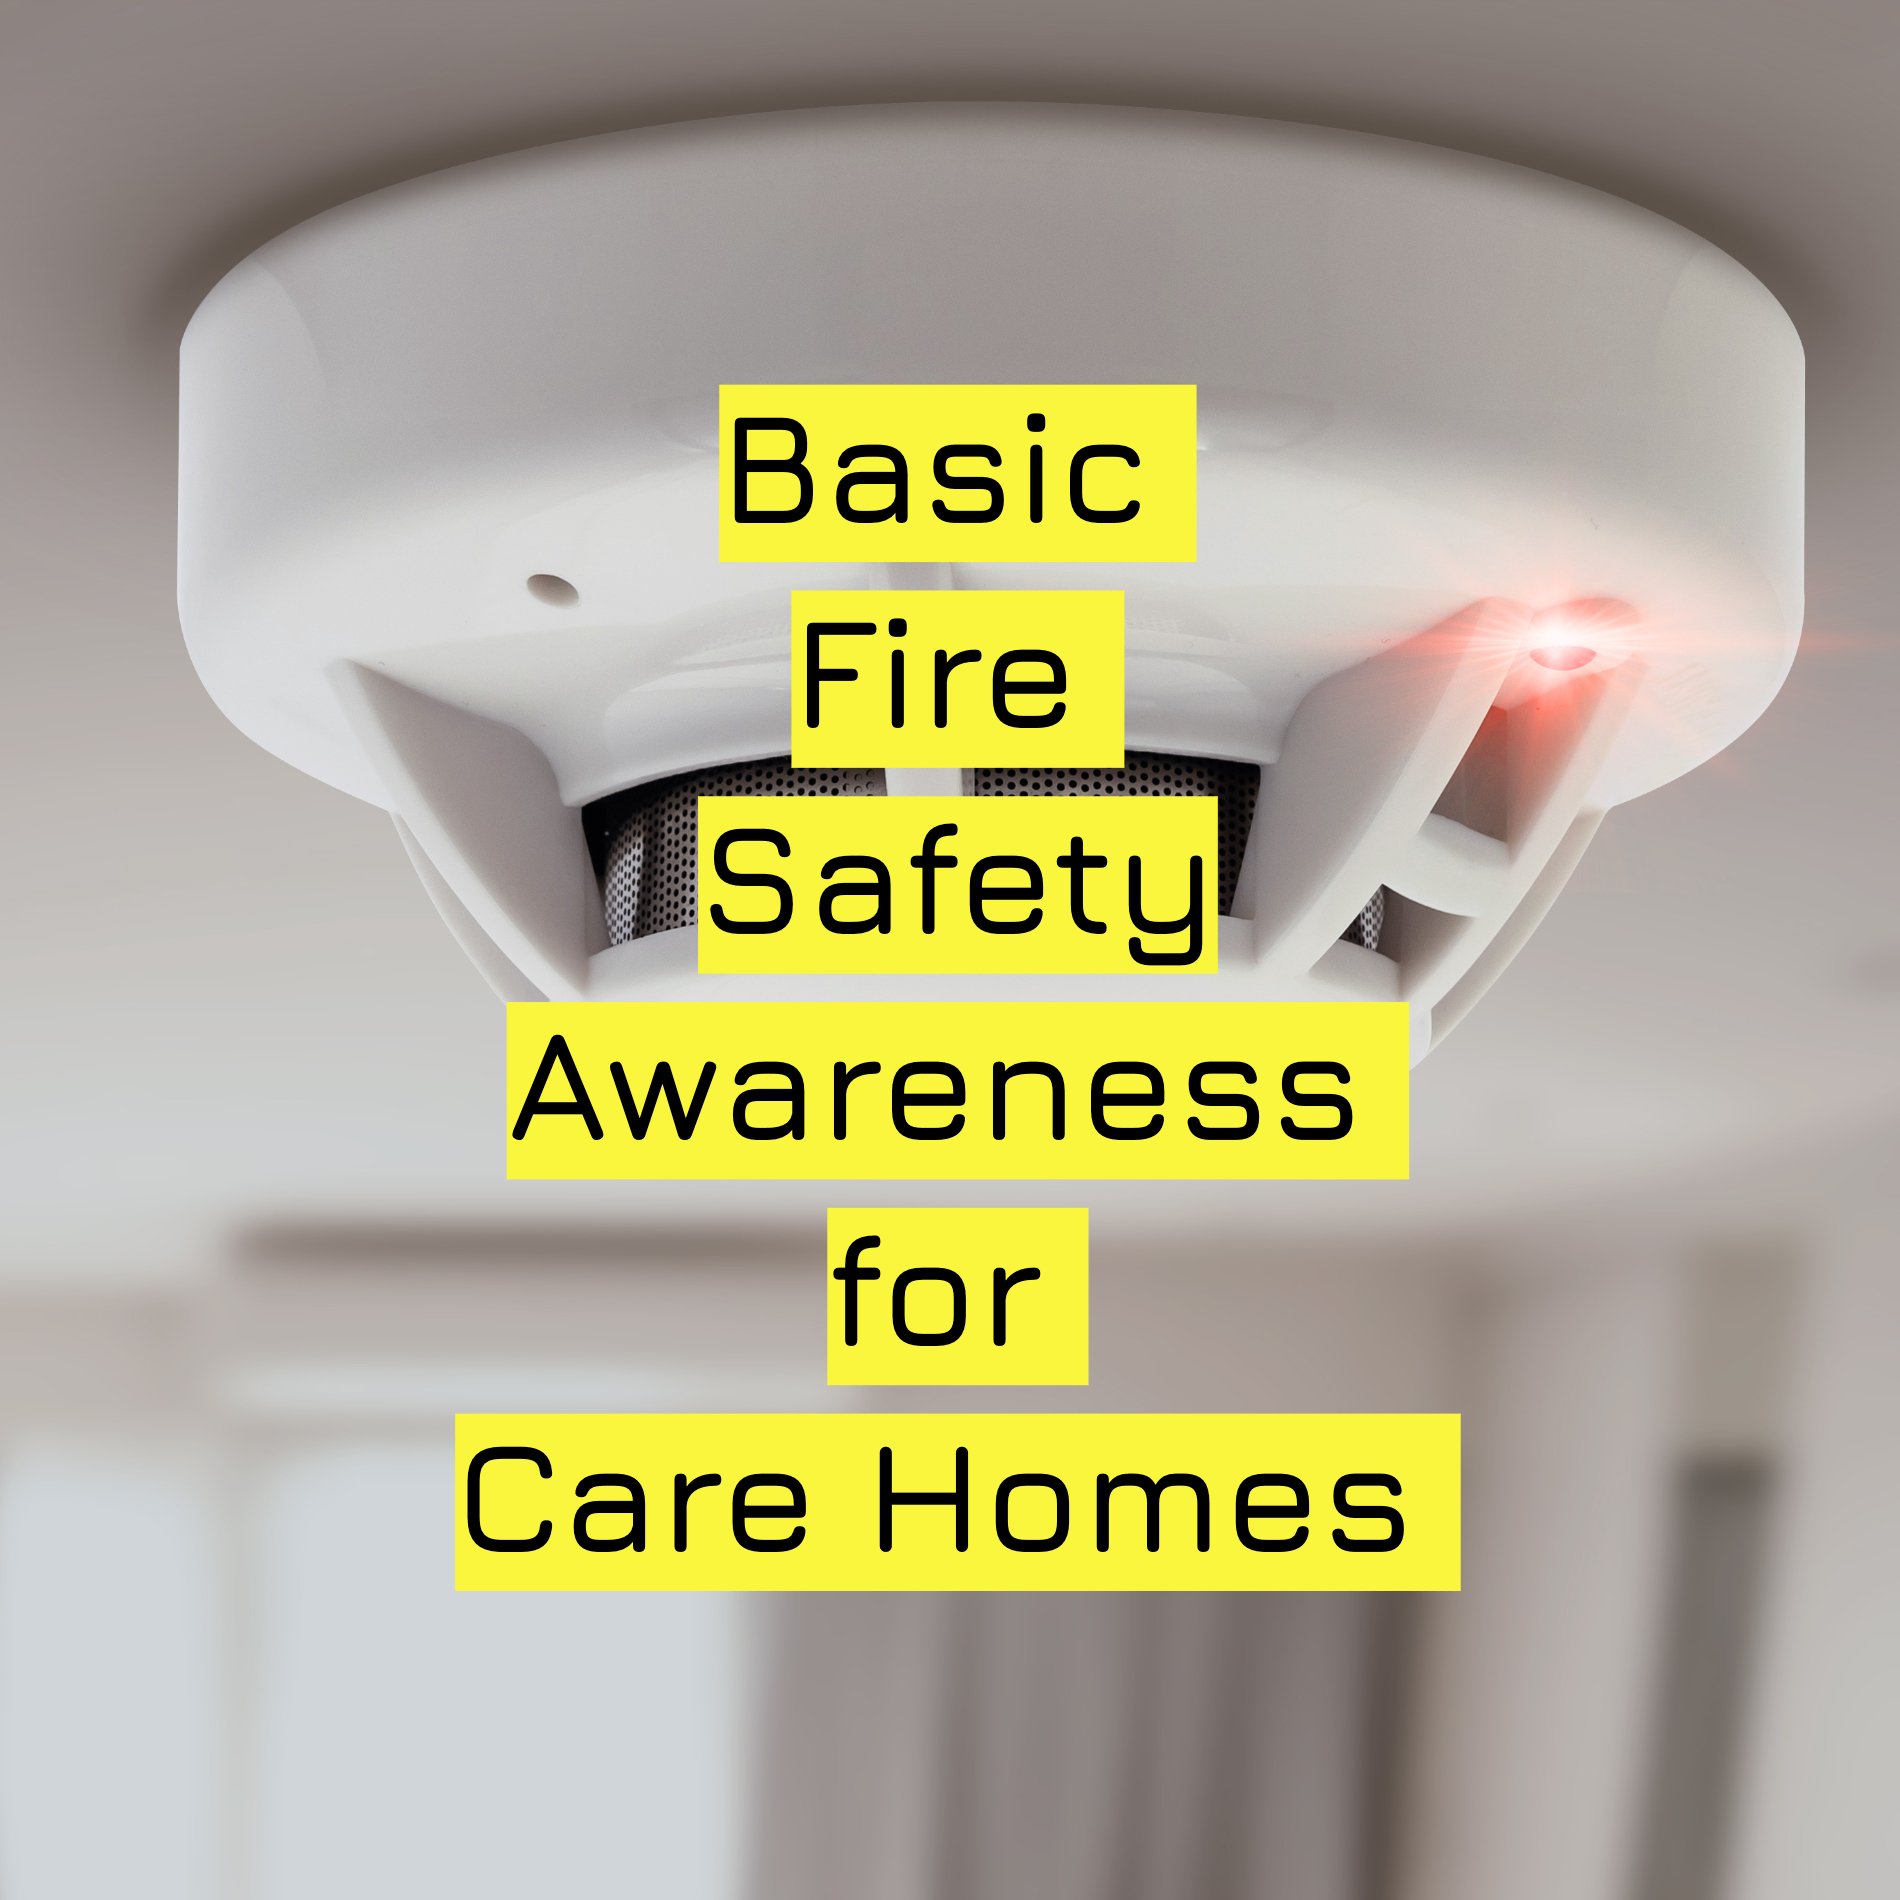 Basic Fire Safety Awareness for Care Homes .jpg